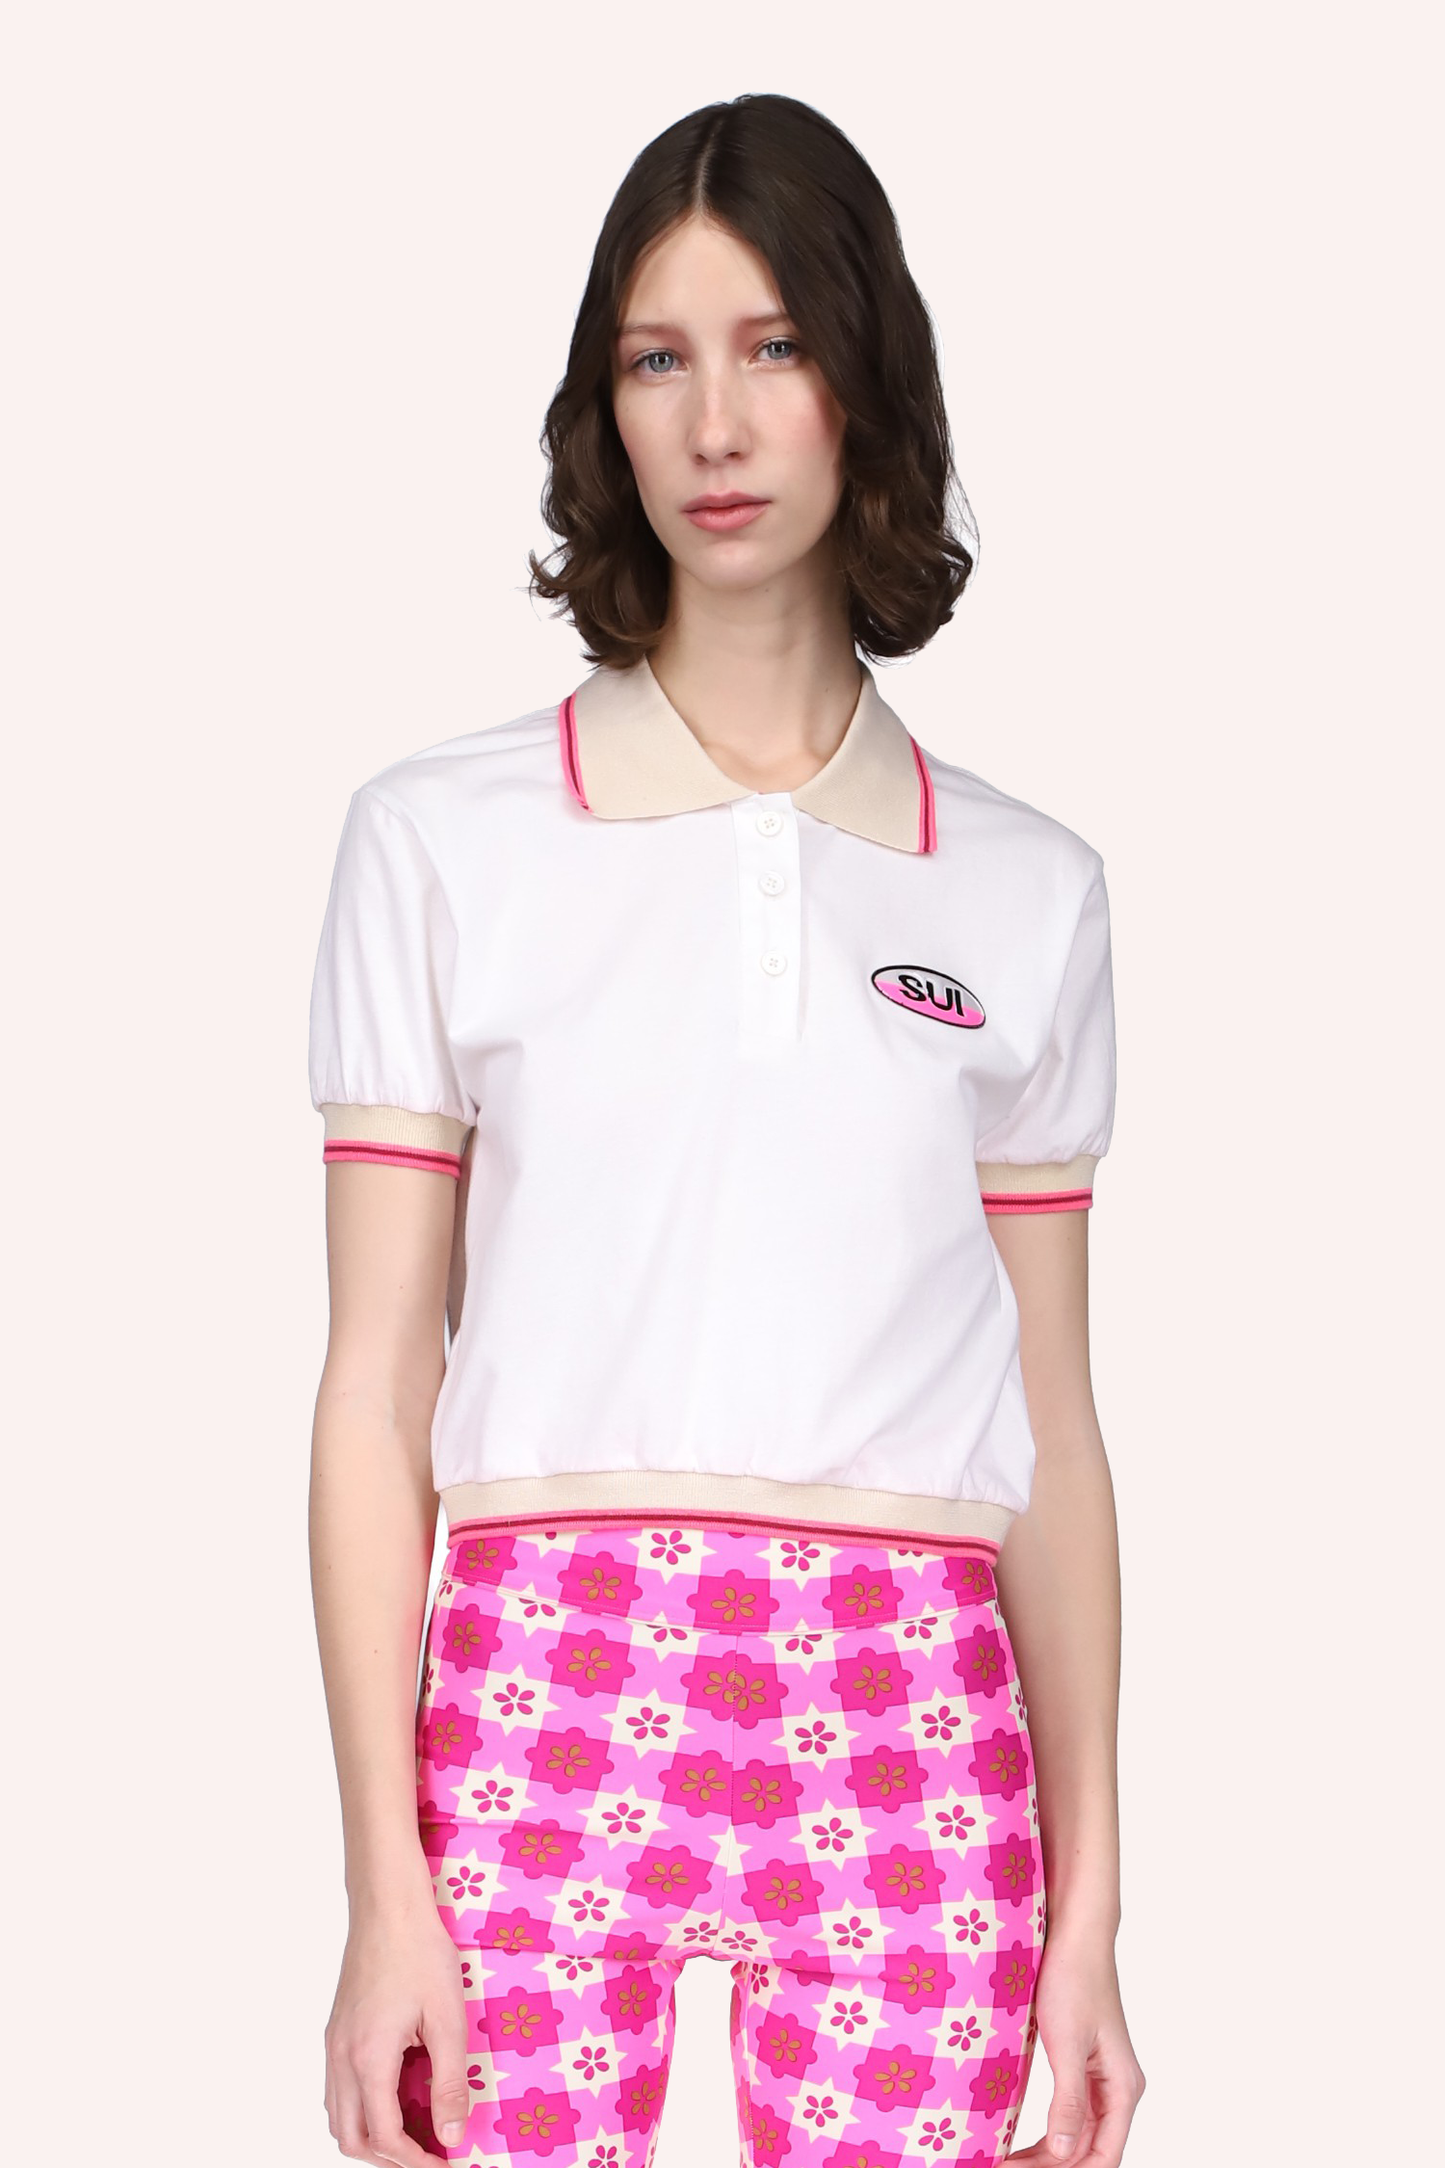 Deco Polo Top Neon Pink, t-shirt bianca, cuciture con linee beige e rosa, etichetta SUI a sinistra